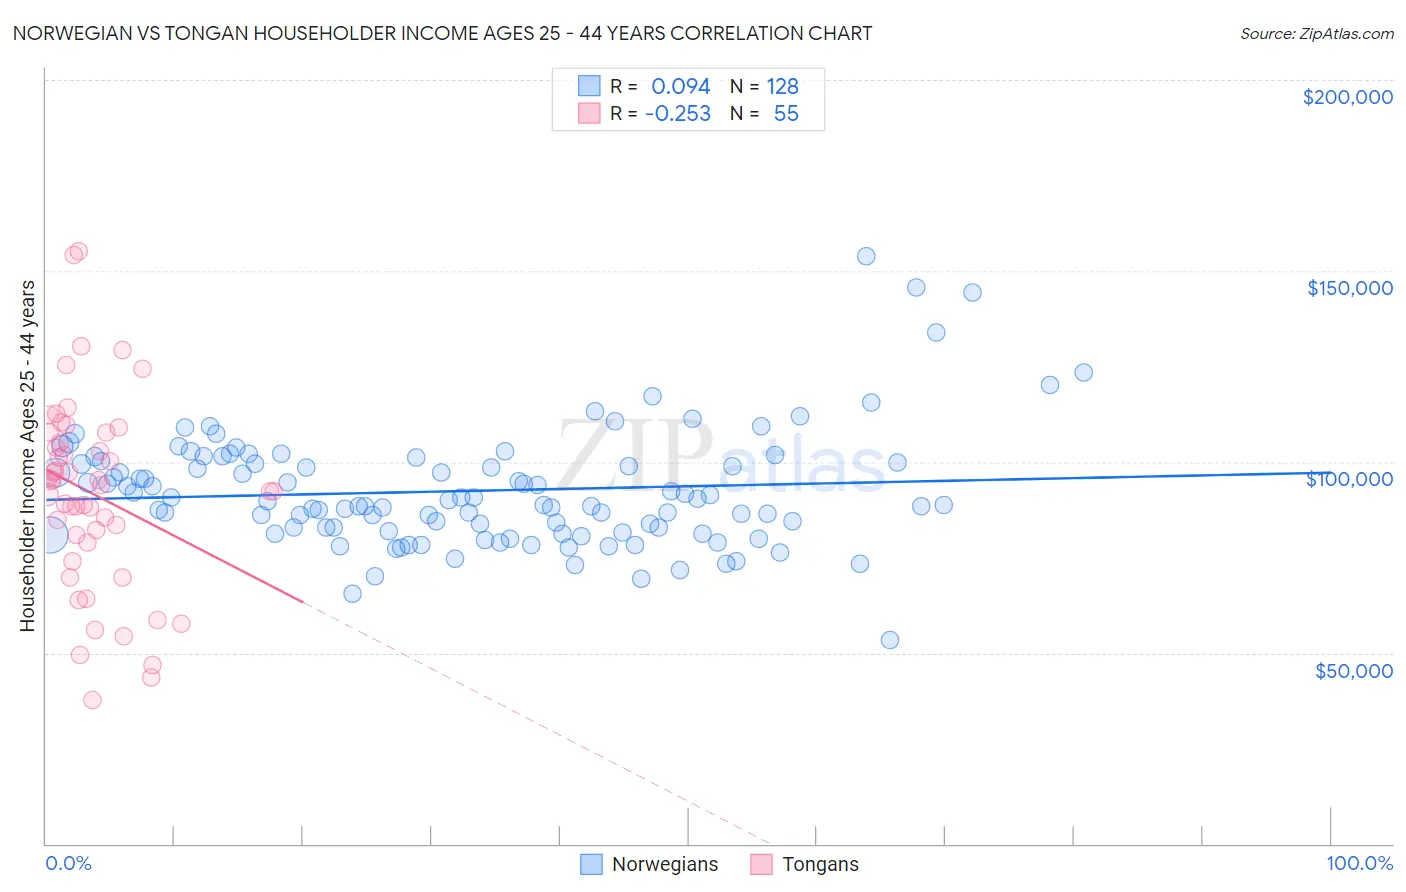 Norwegian vs Tongan Householder Income Ages 25 - 44 years